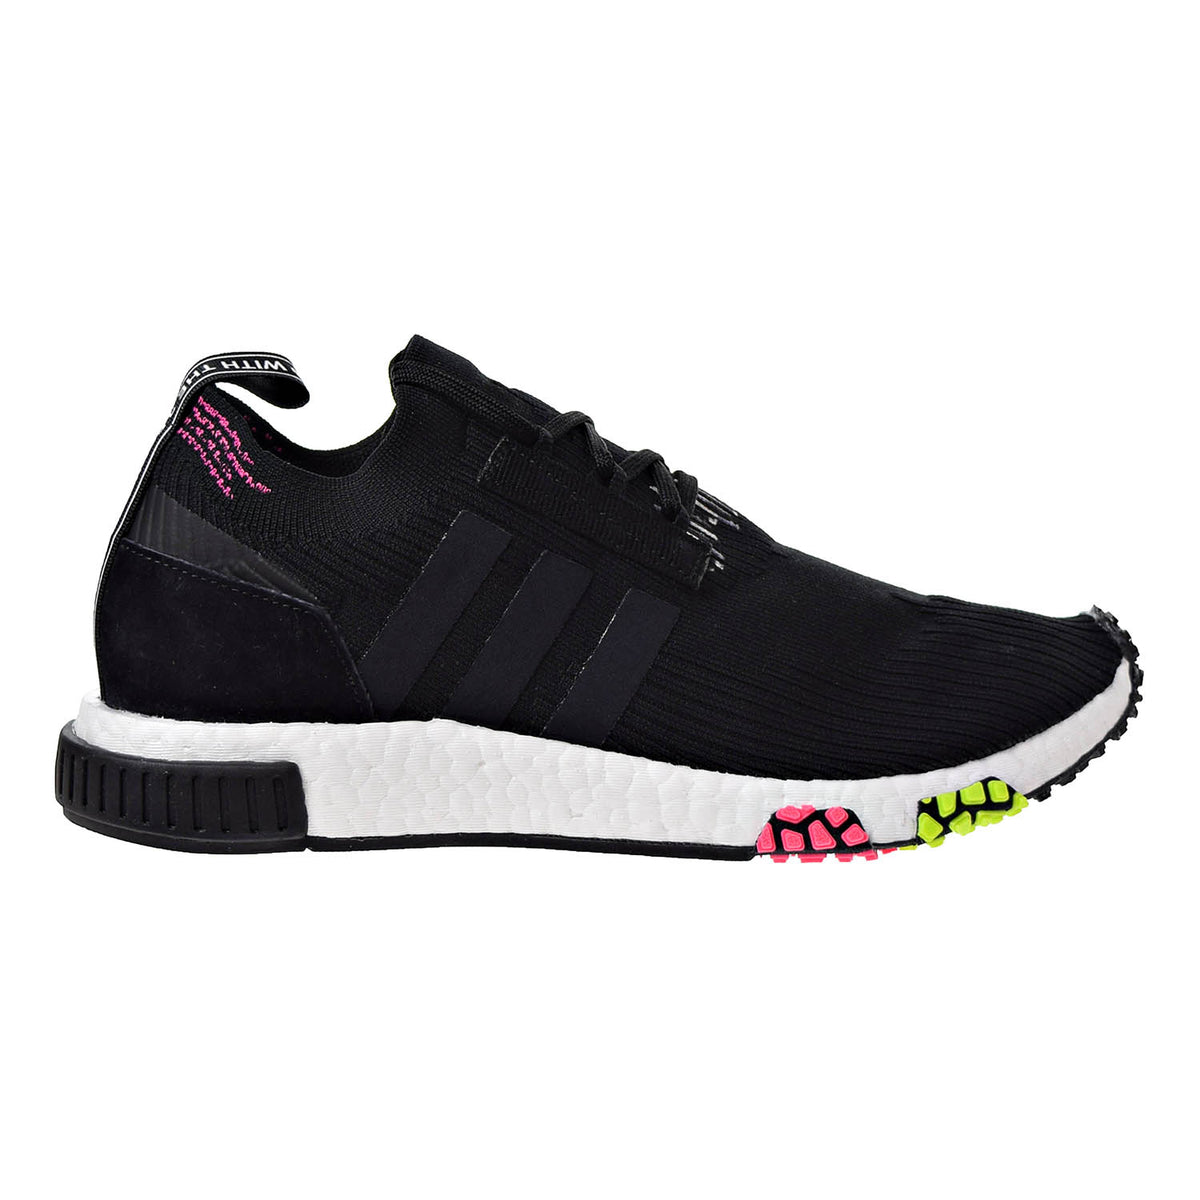 Adidas NMD_Racer Men's Running Shoes Core Black/Core Black/S